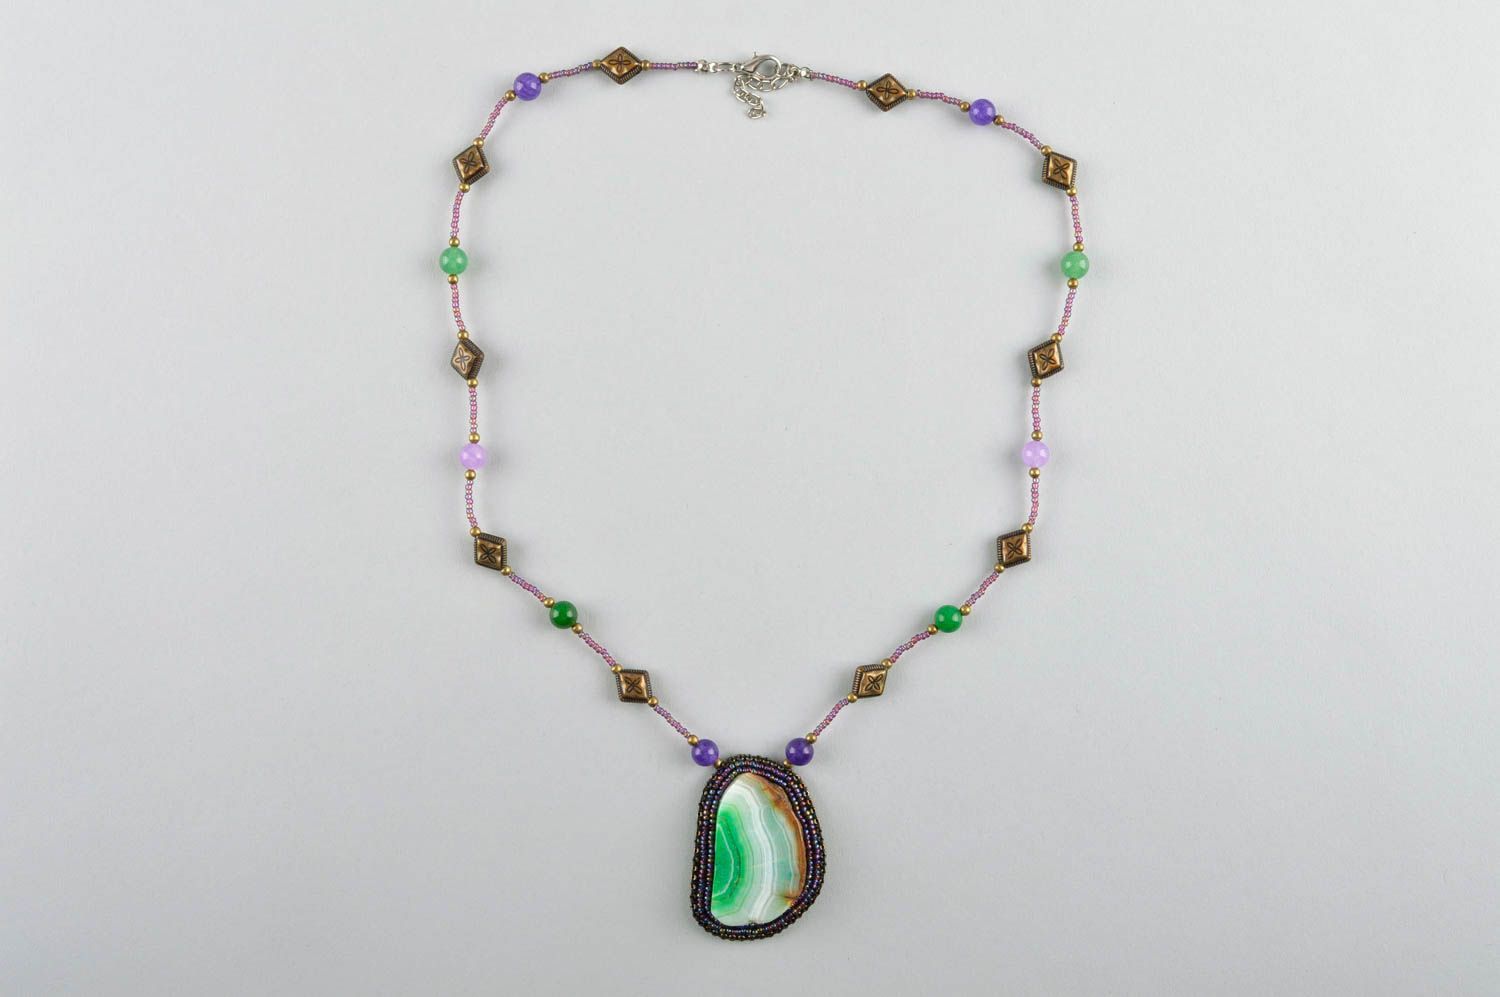 Handmade necklace beaded necklace designer jewelry unusual accessory gift ideas photo 2